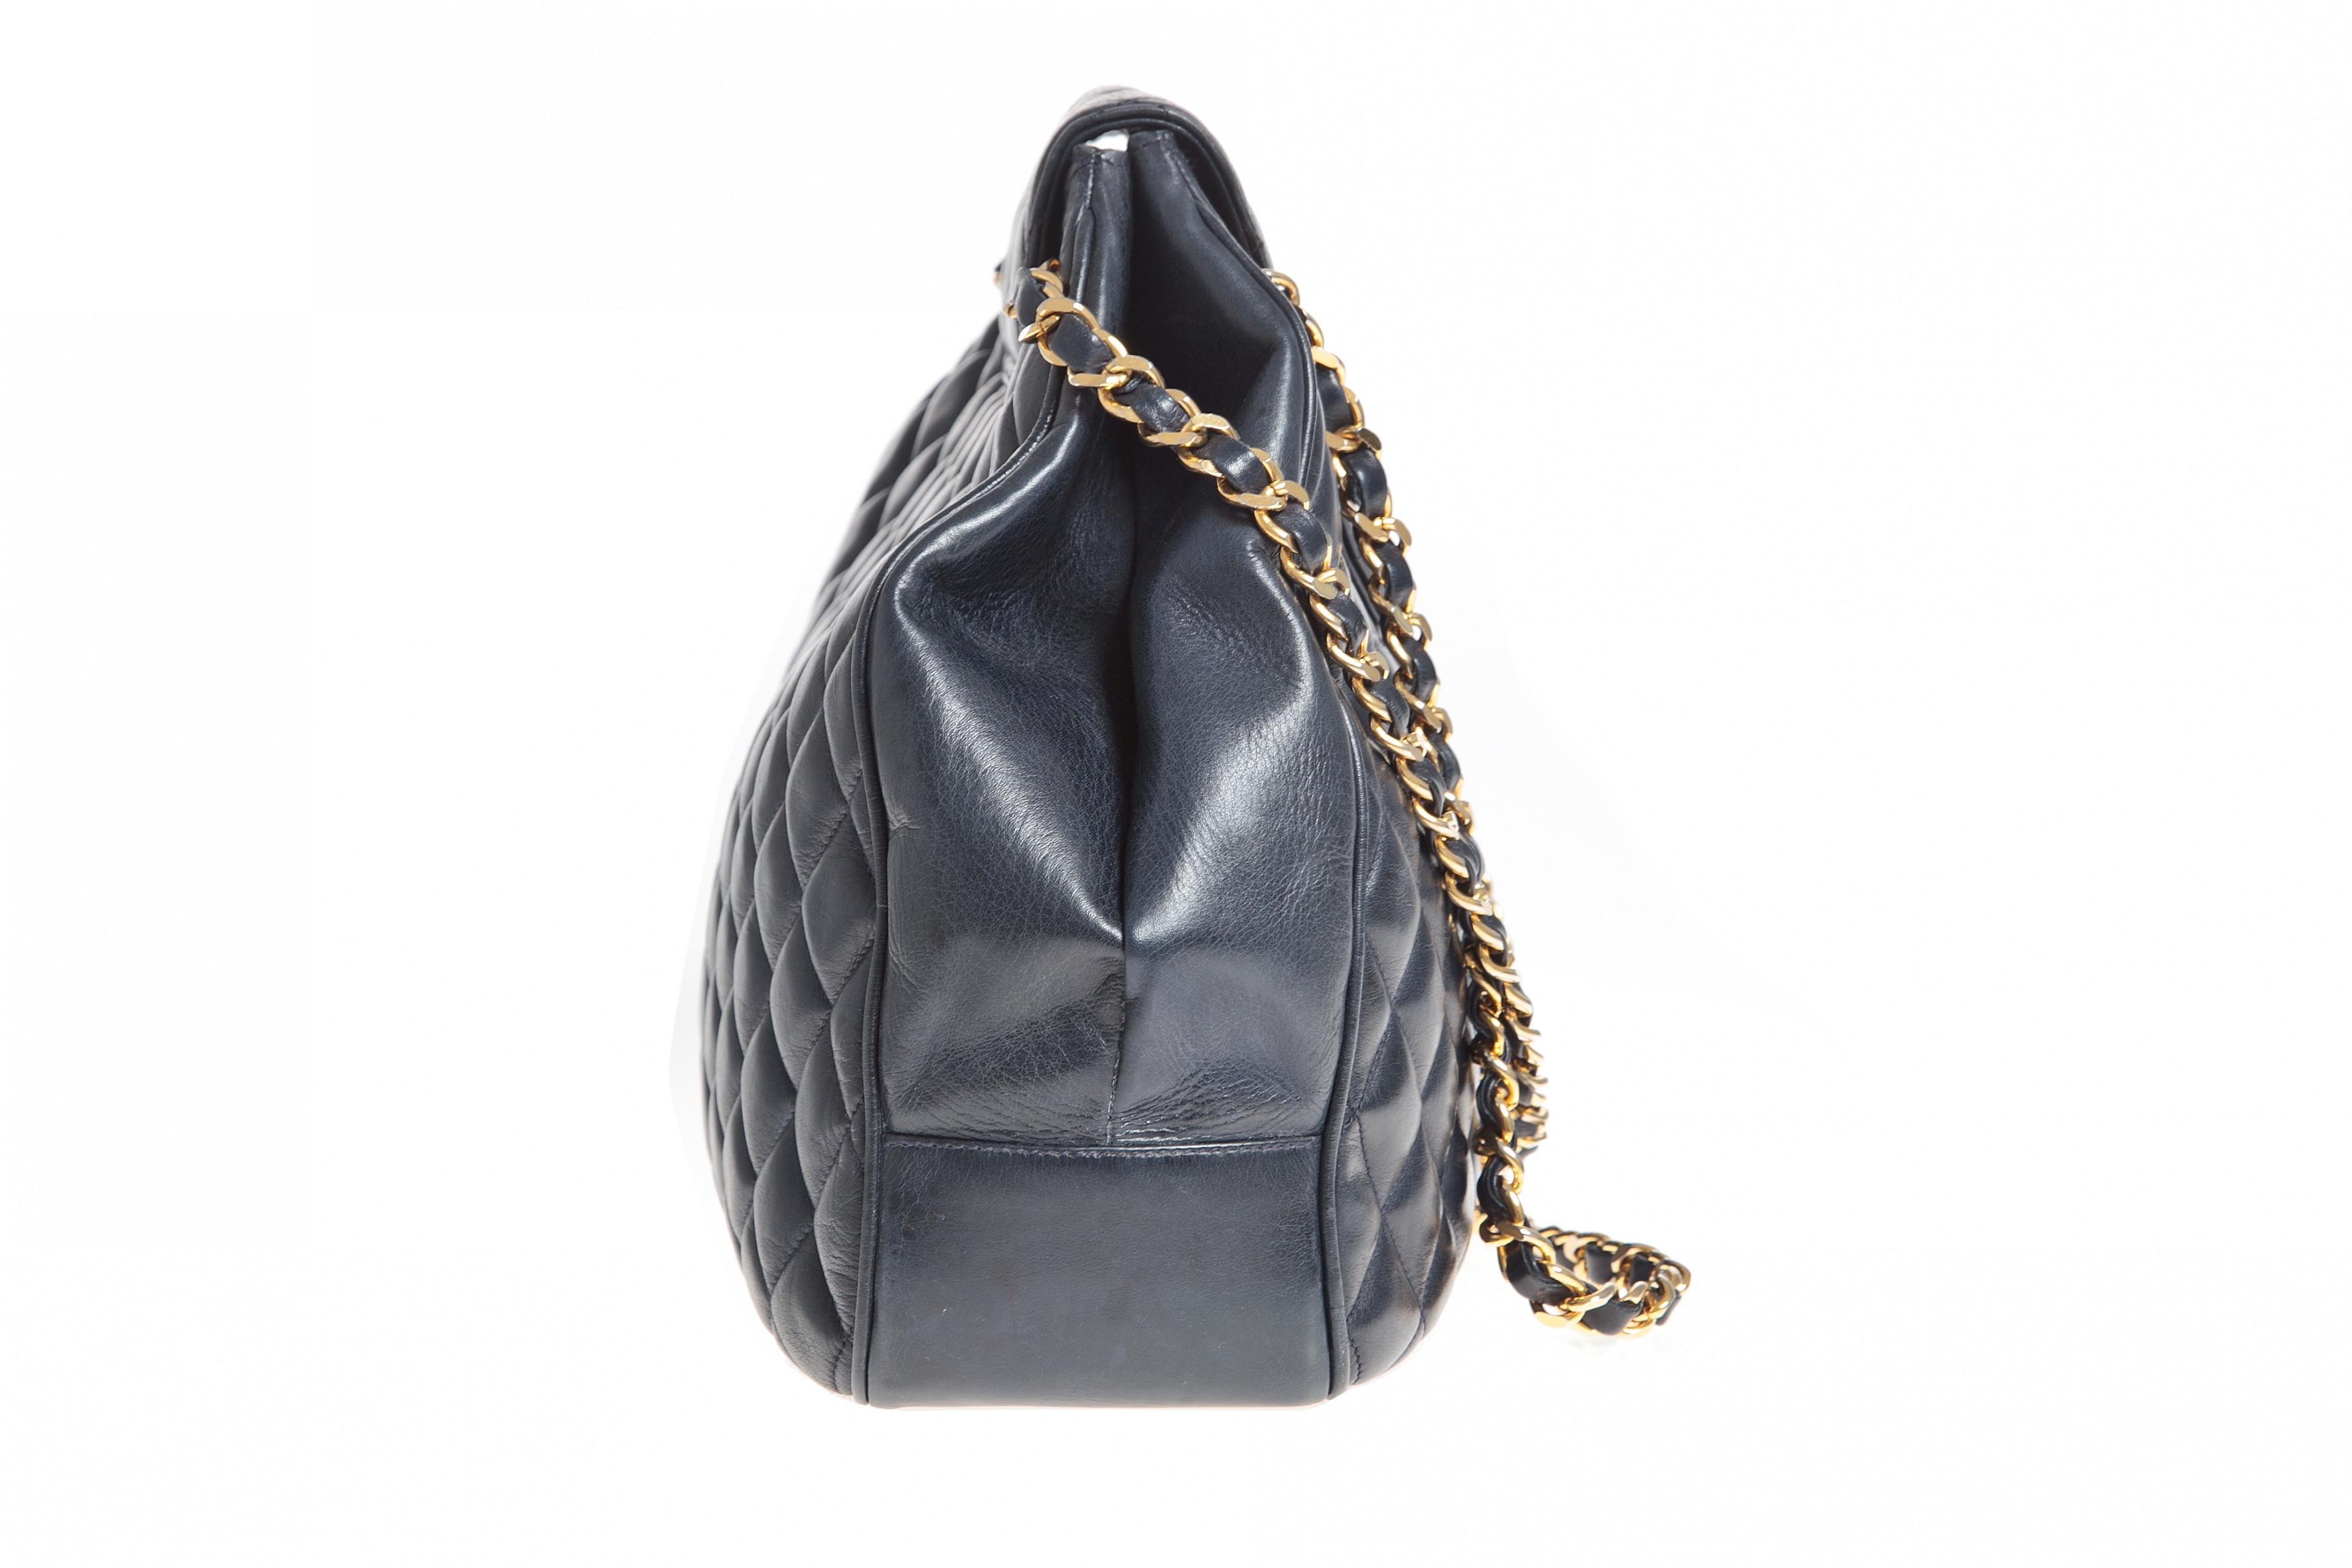 Chanel dark blue trapezoid handbag